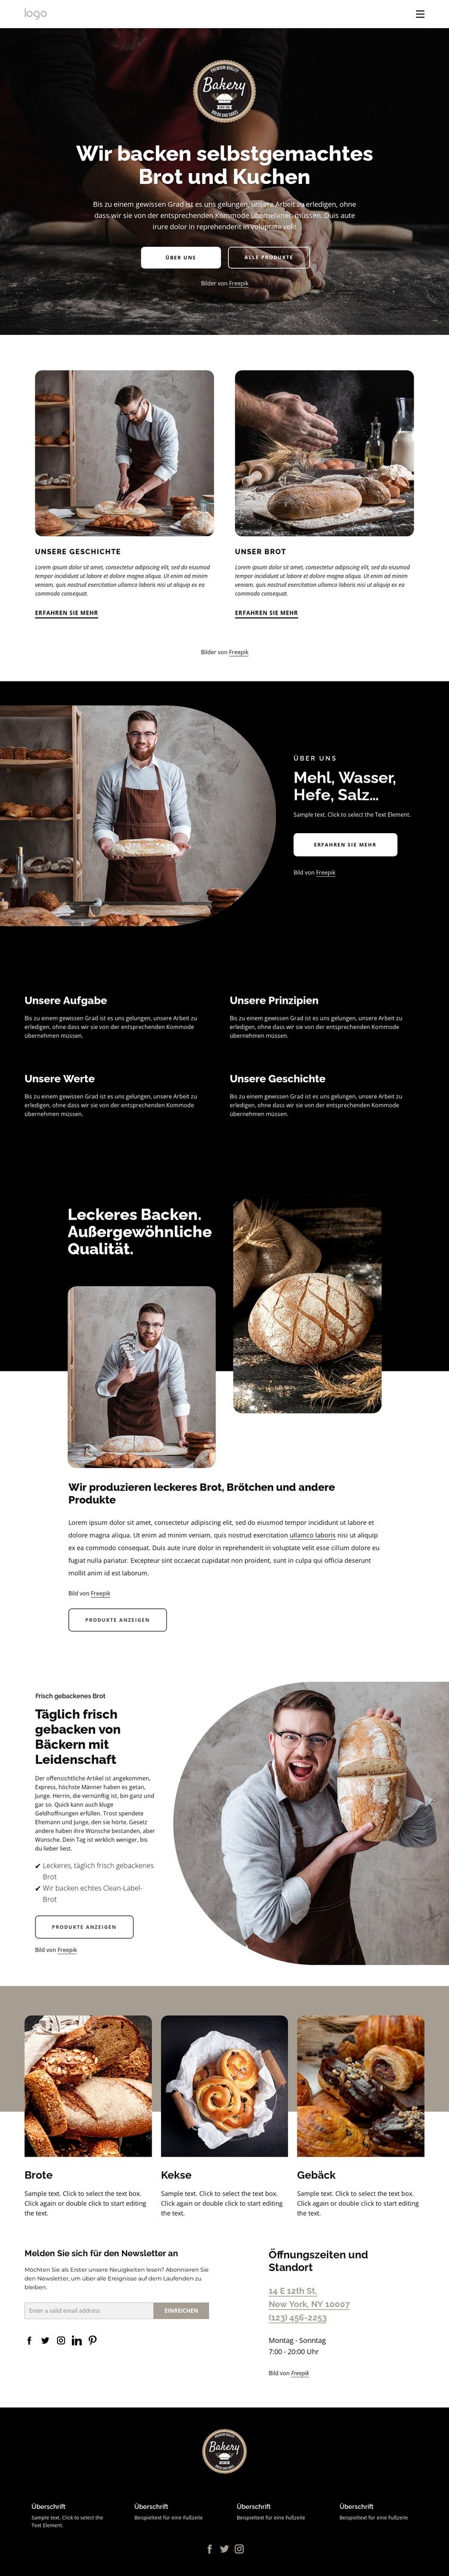 Wir backen selbstgebackenes Brot Website design